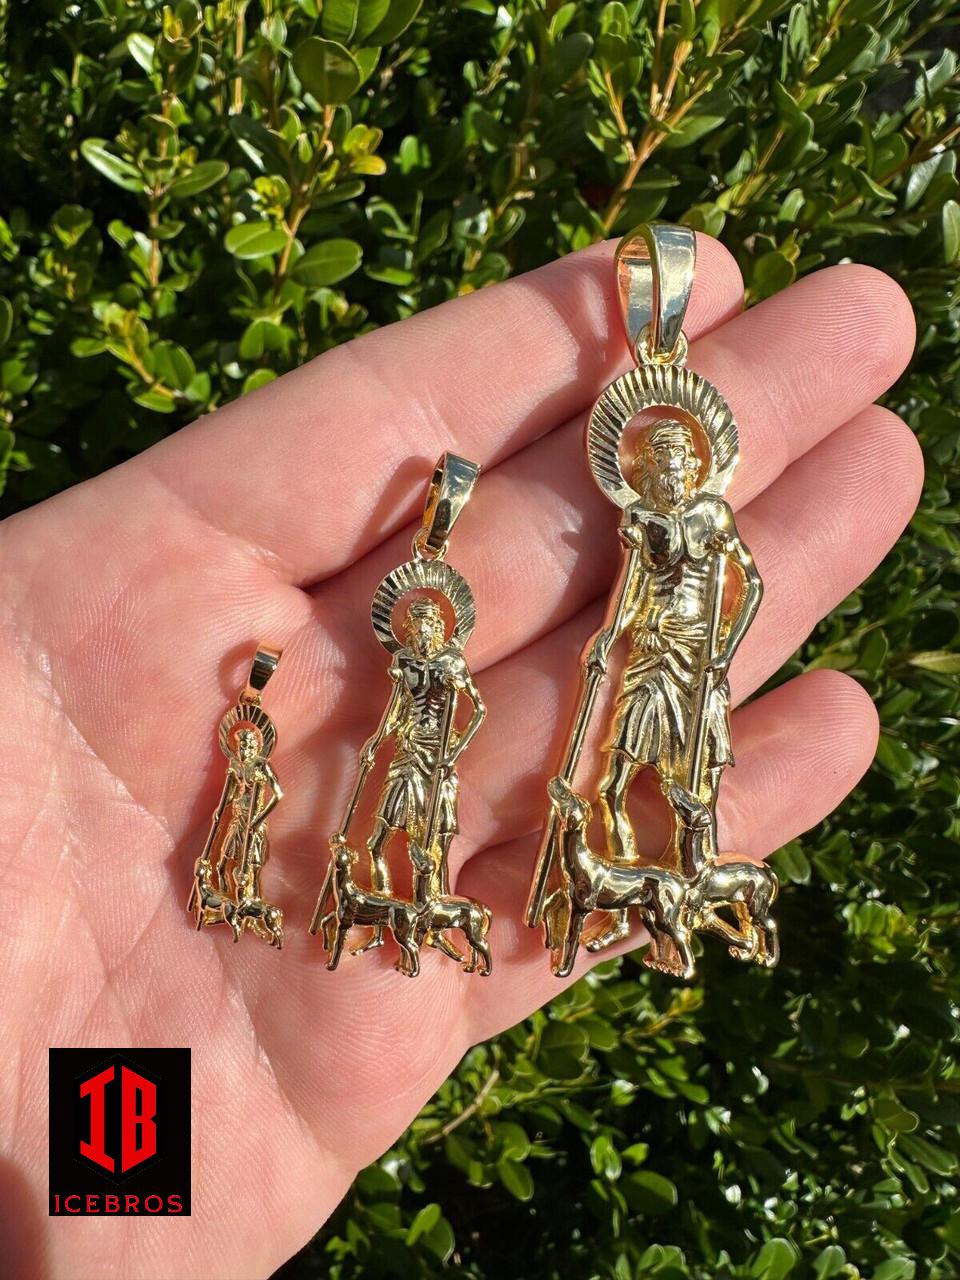 SAINT St LAZARUS Charm Necklace, 14K Gold over 925 Silver San Lazaro PENDANT, Religious Jewelry for Men & Women, Gift Pendant For Unisex